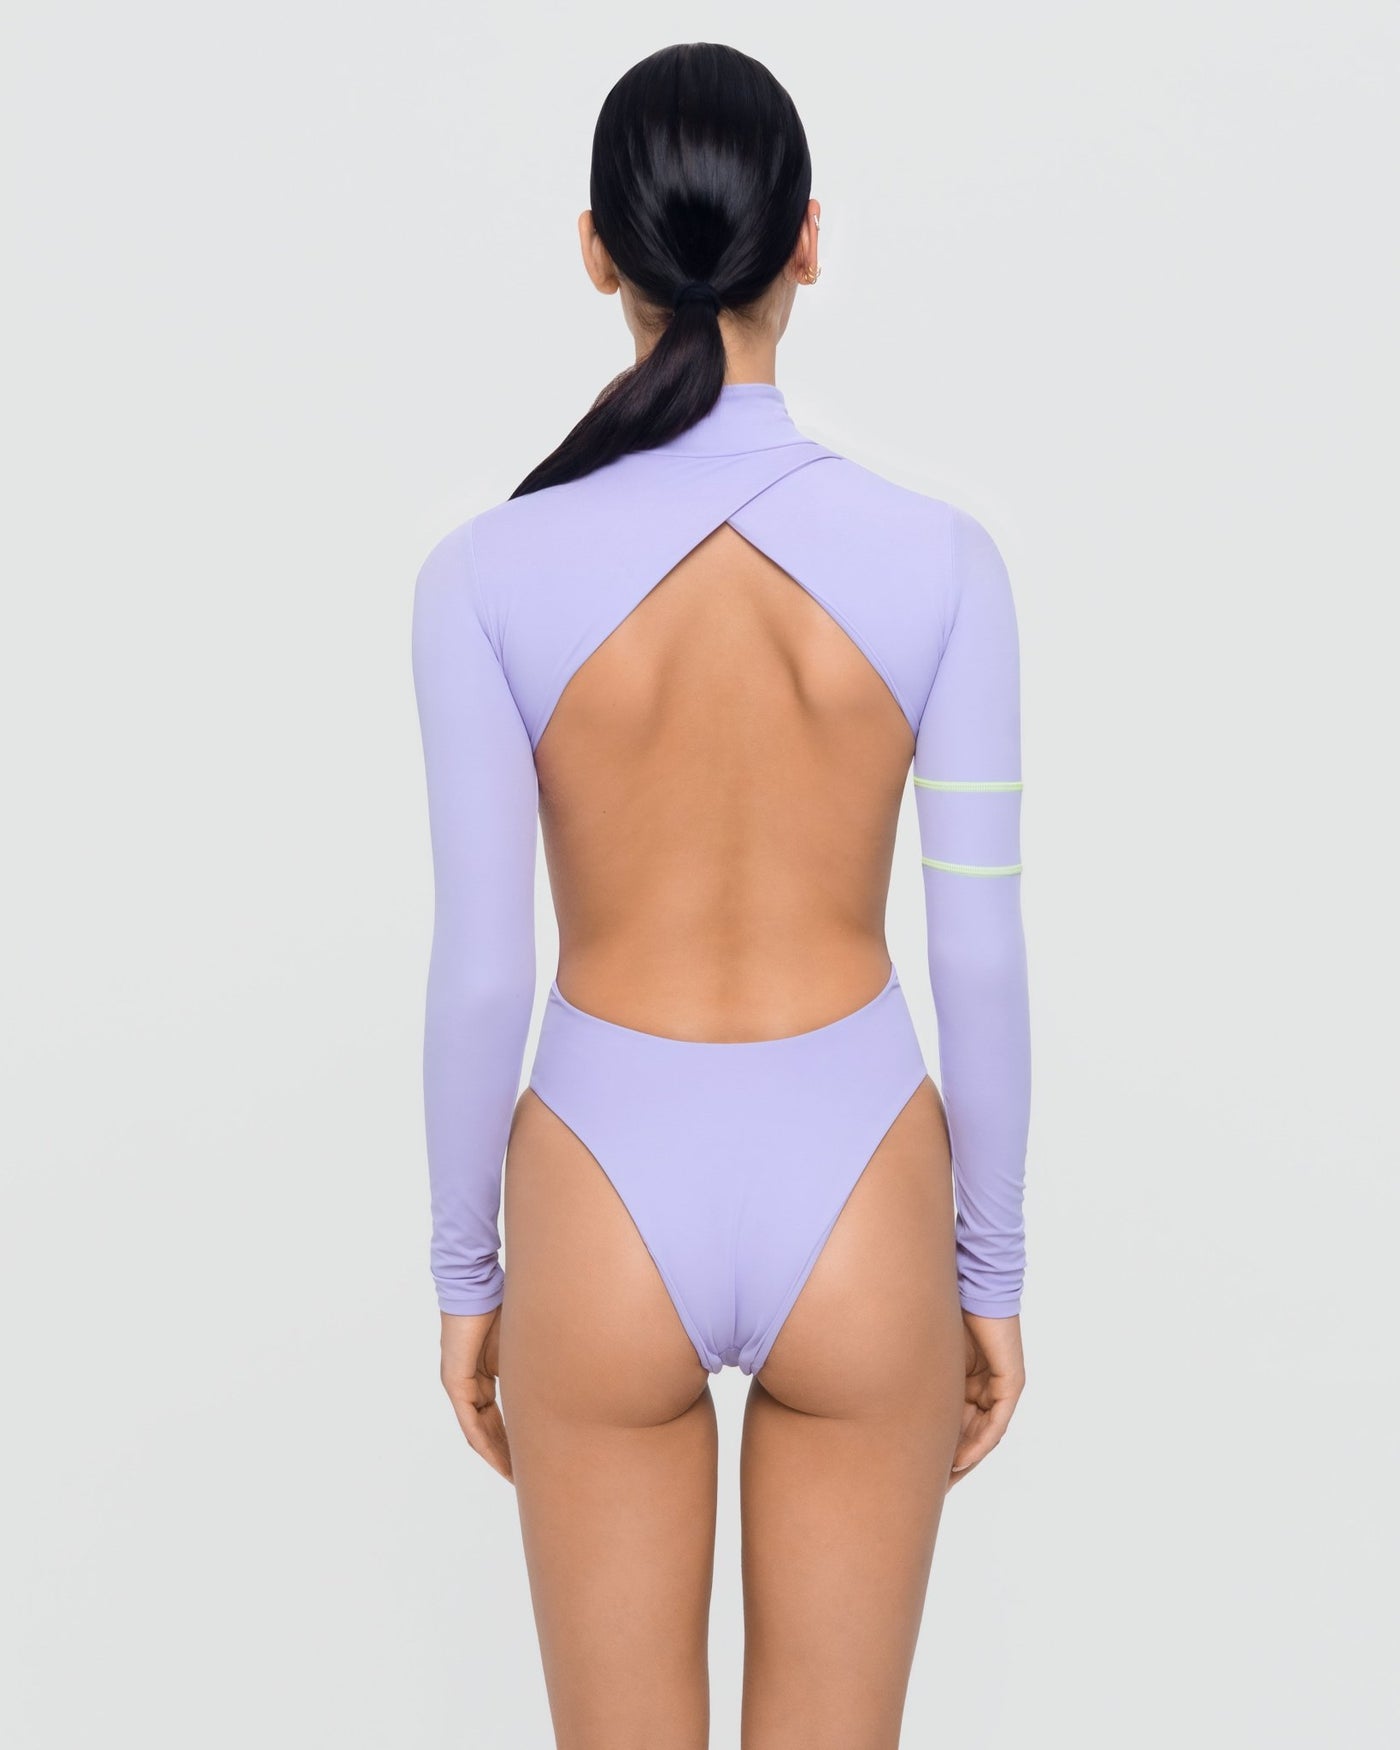 Gozen Long Sleeve Swimwear - Makara wear